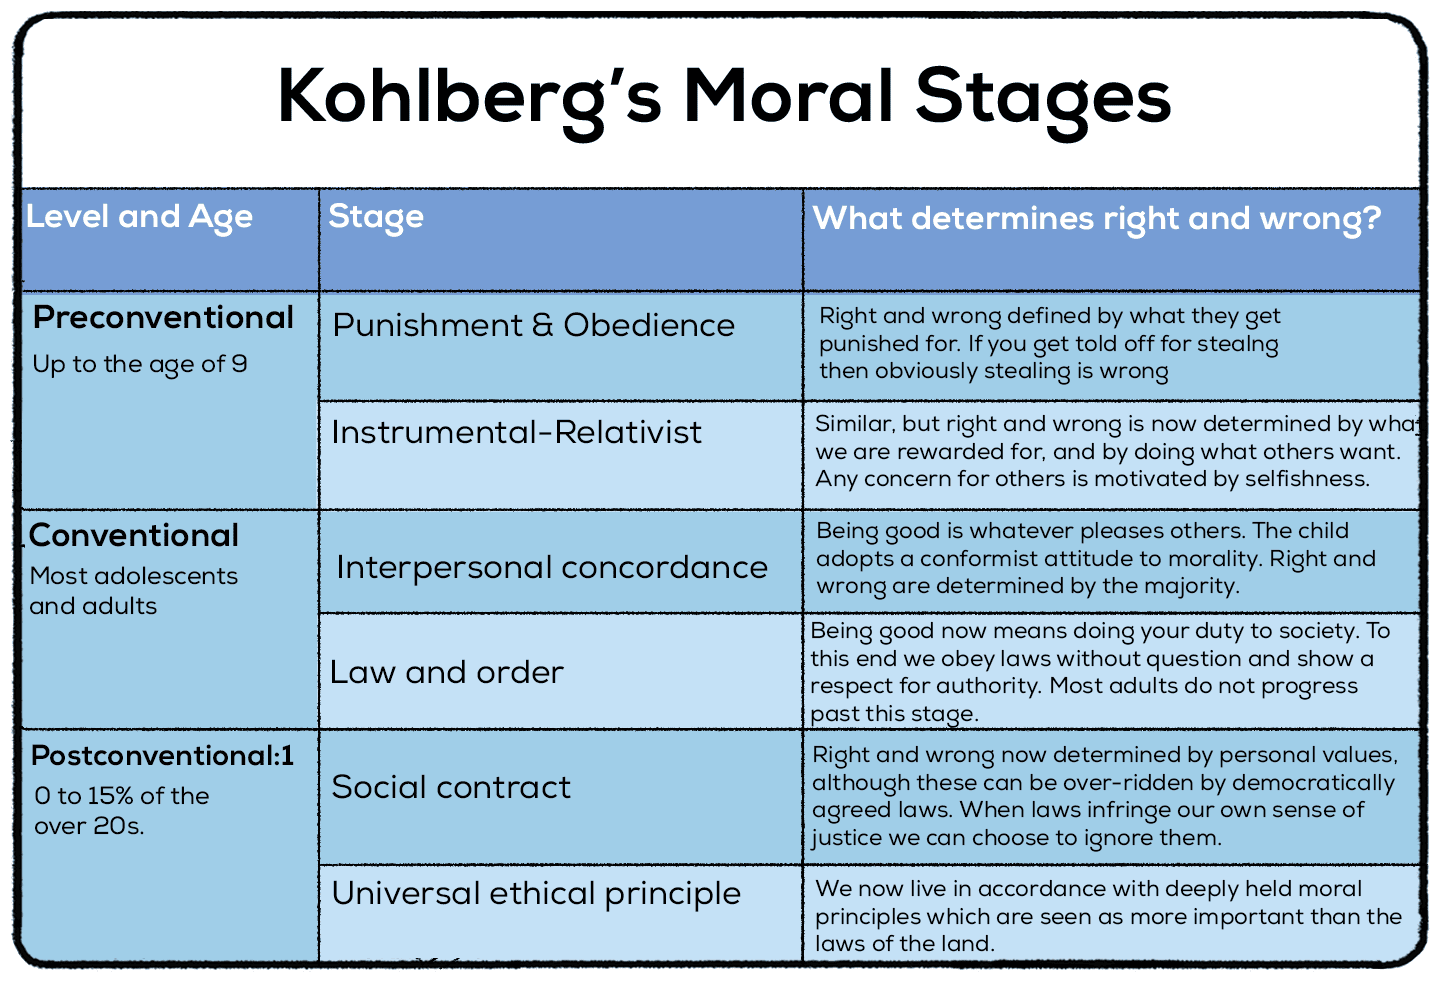 essays on moral development kohlberg pdf